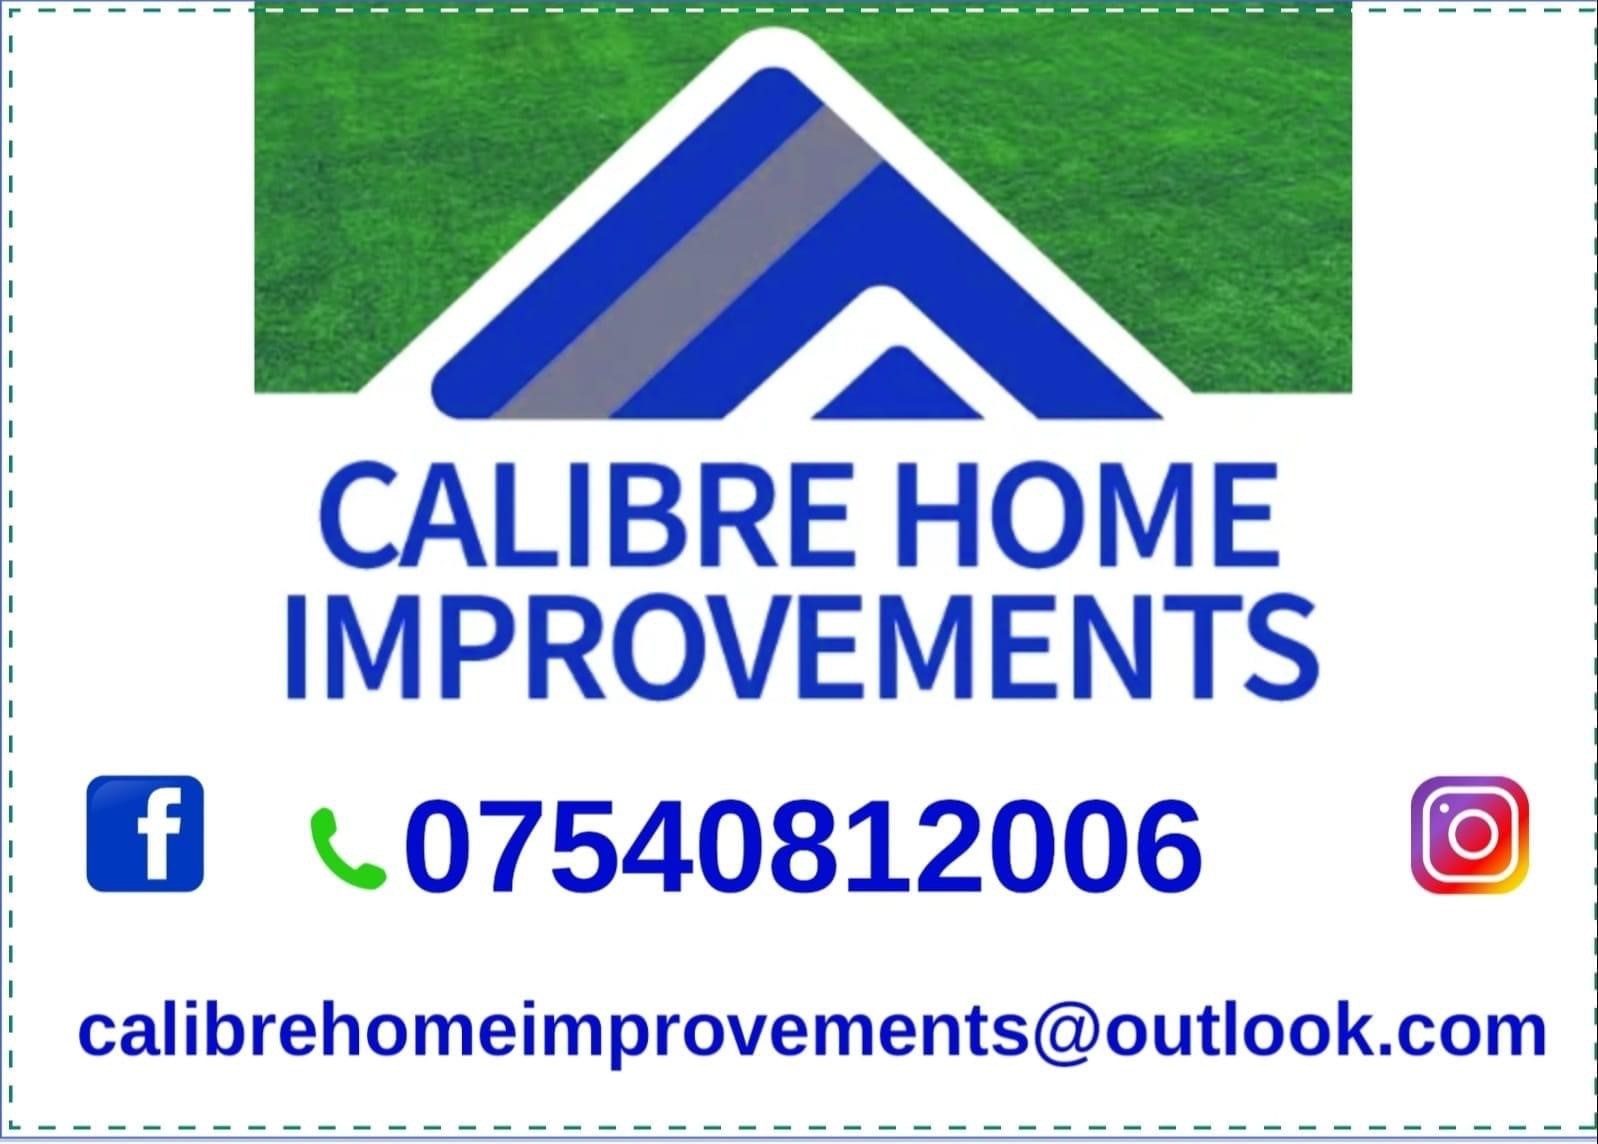 Calibre Home Imporovements